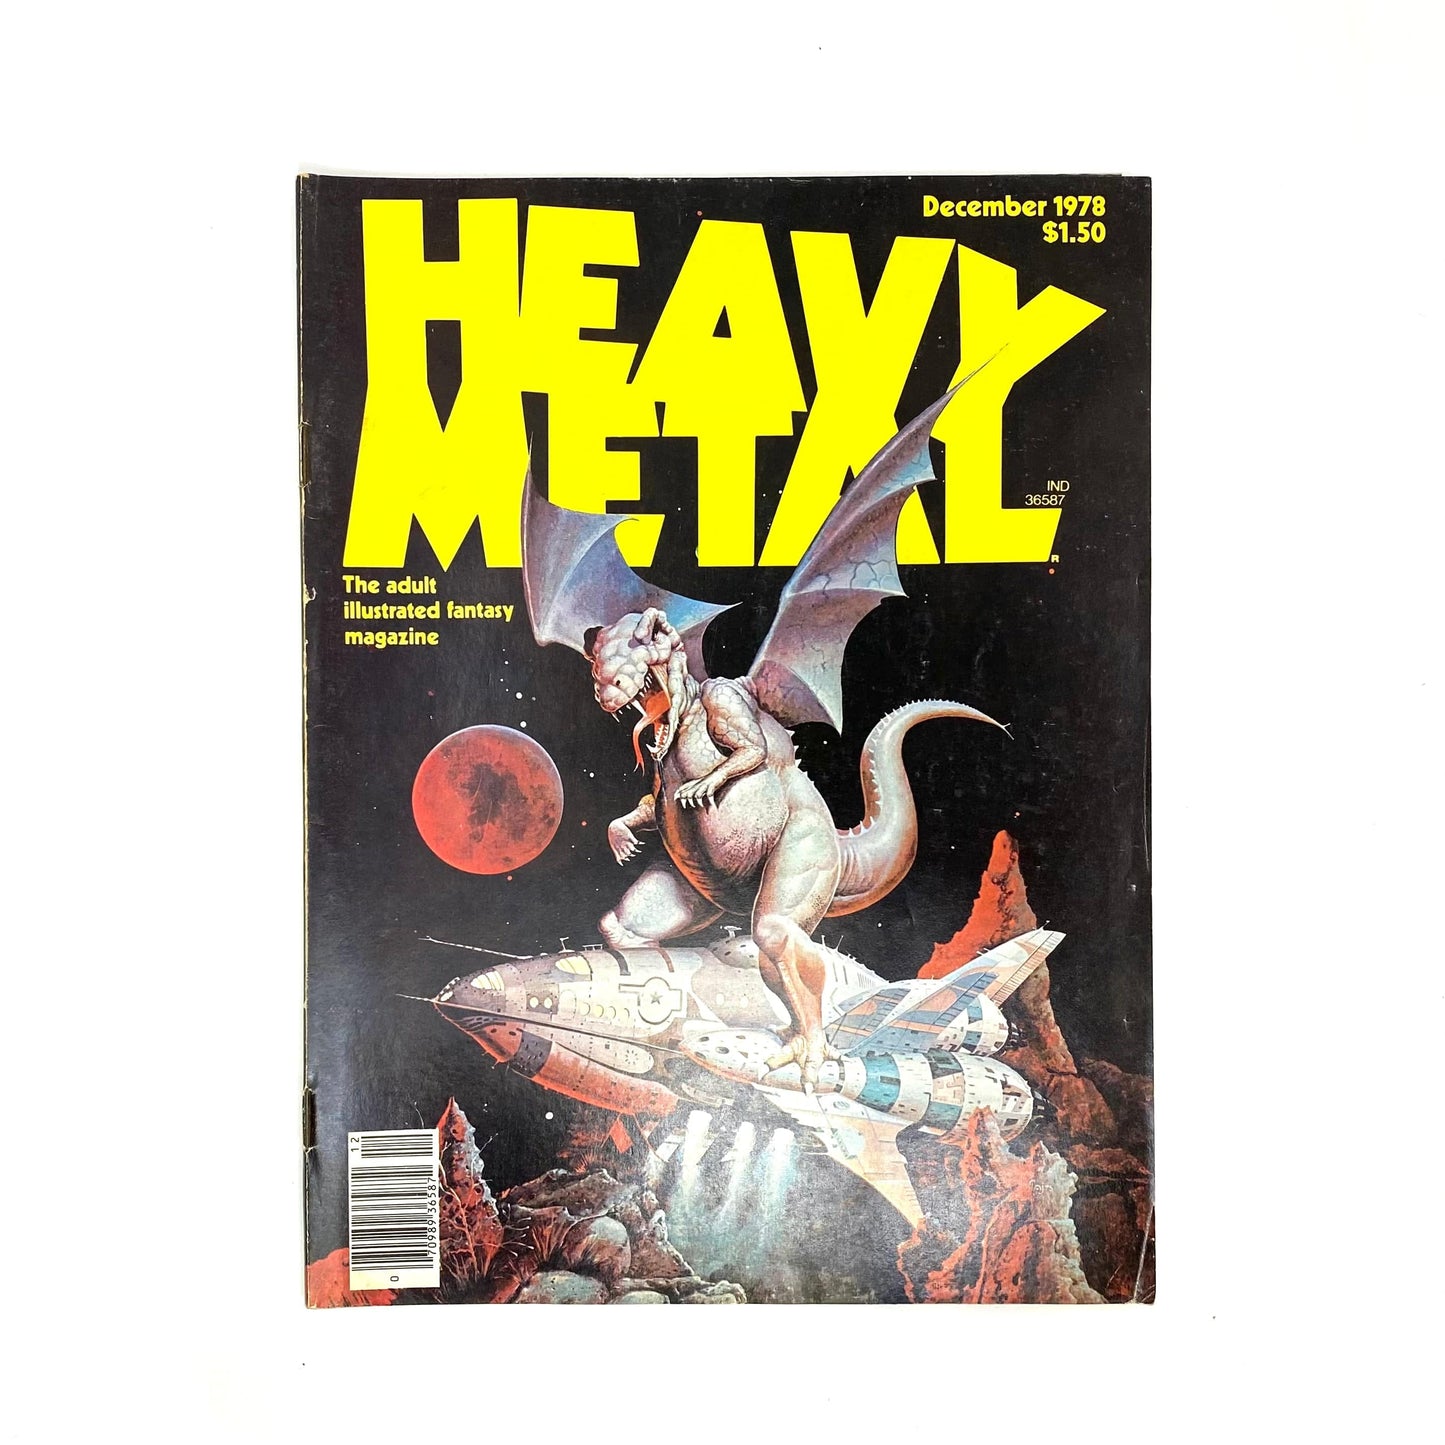 HEAVY METAL - Adult Illustrated Fantasy Erotic Magazine - December 1978